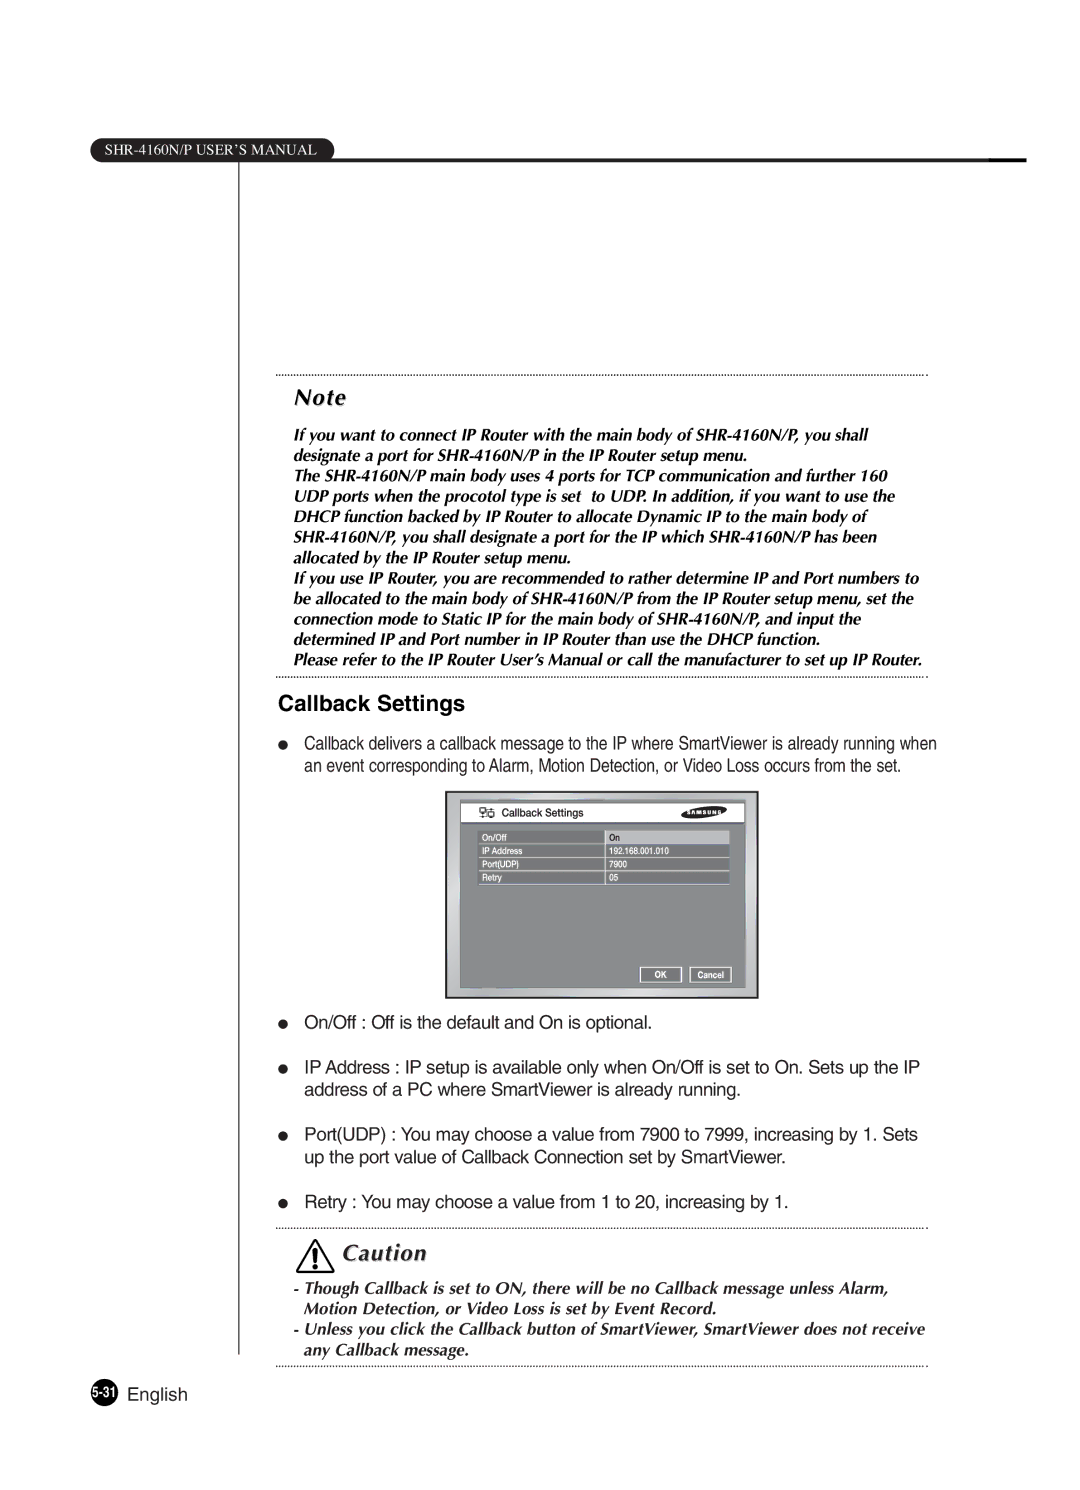 Samsung SHR-4160P manual Callback Settings, 31English 